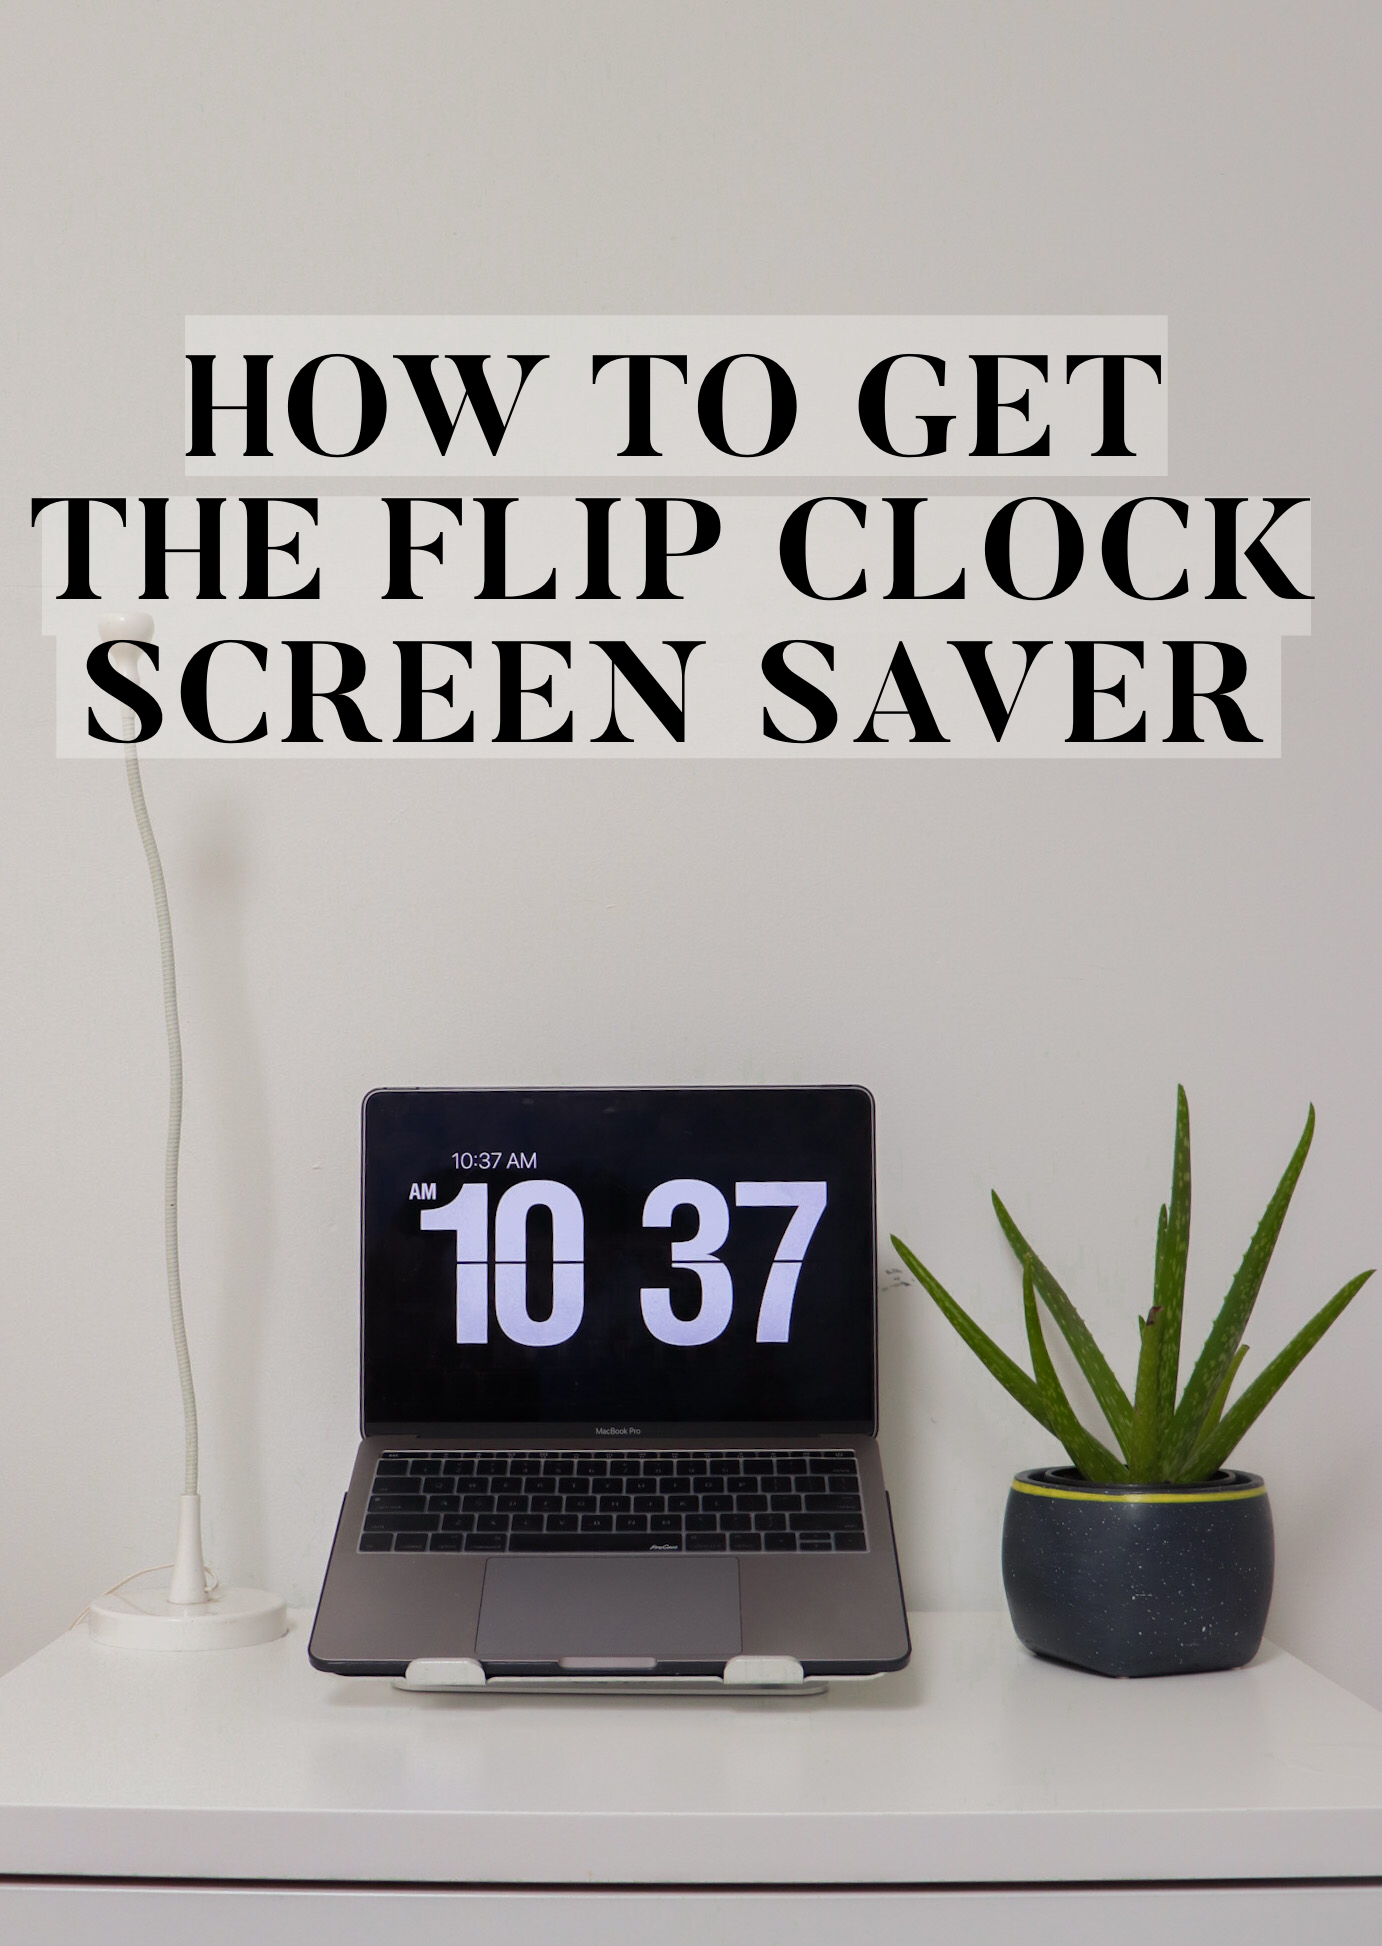 Flip clock screensaver mac download video